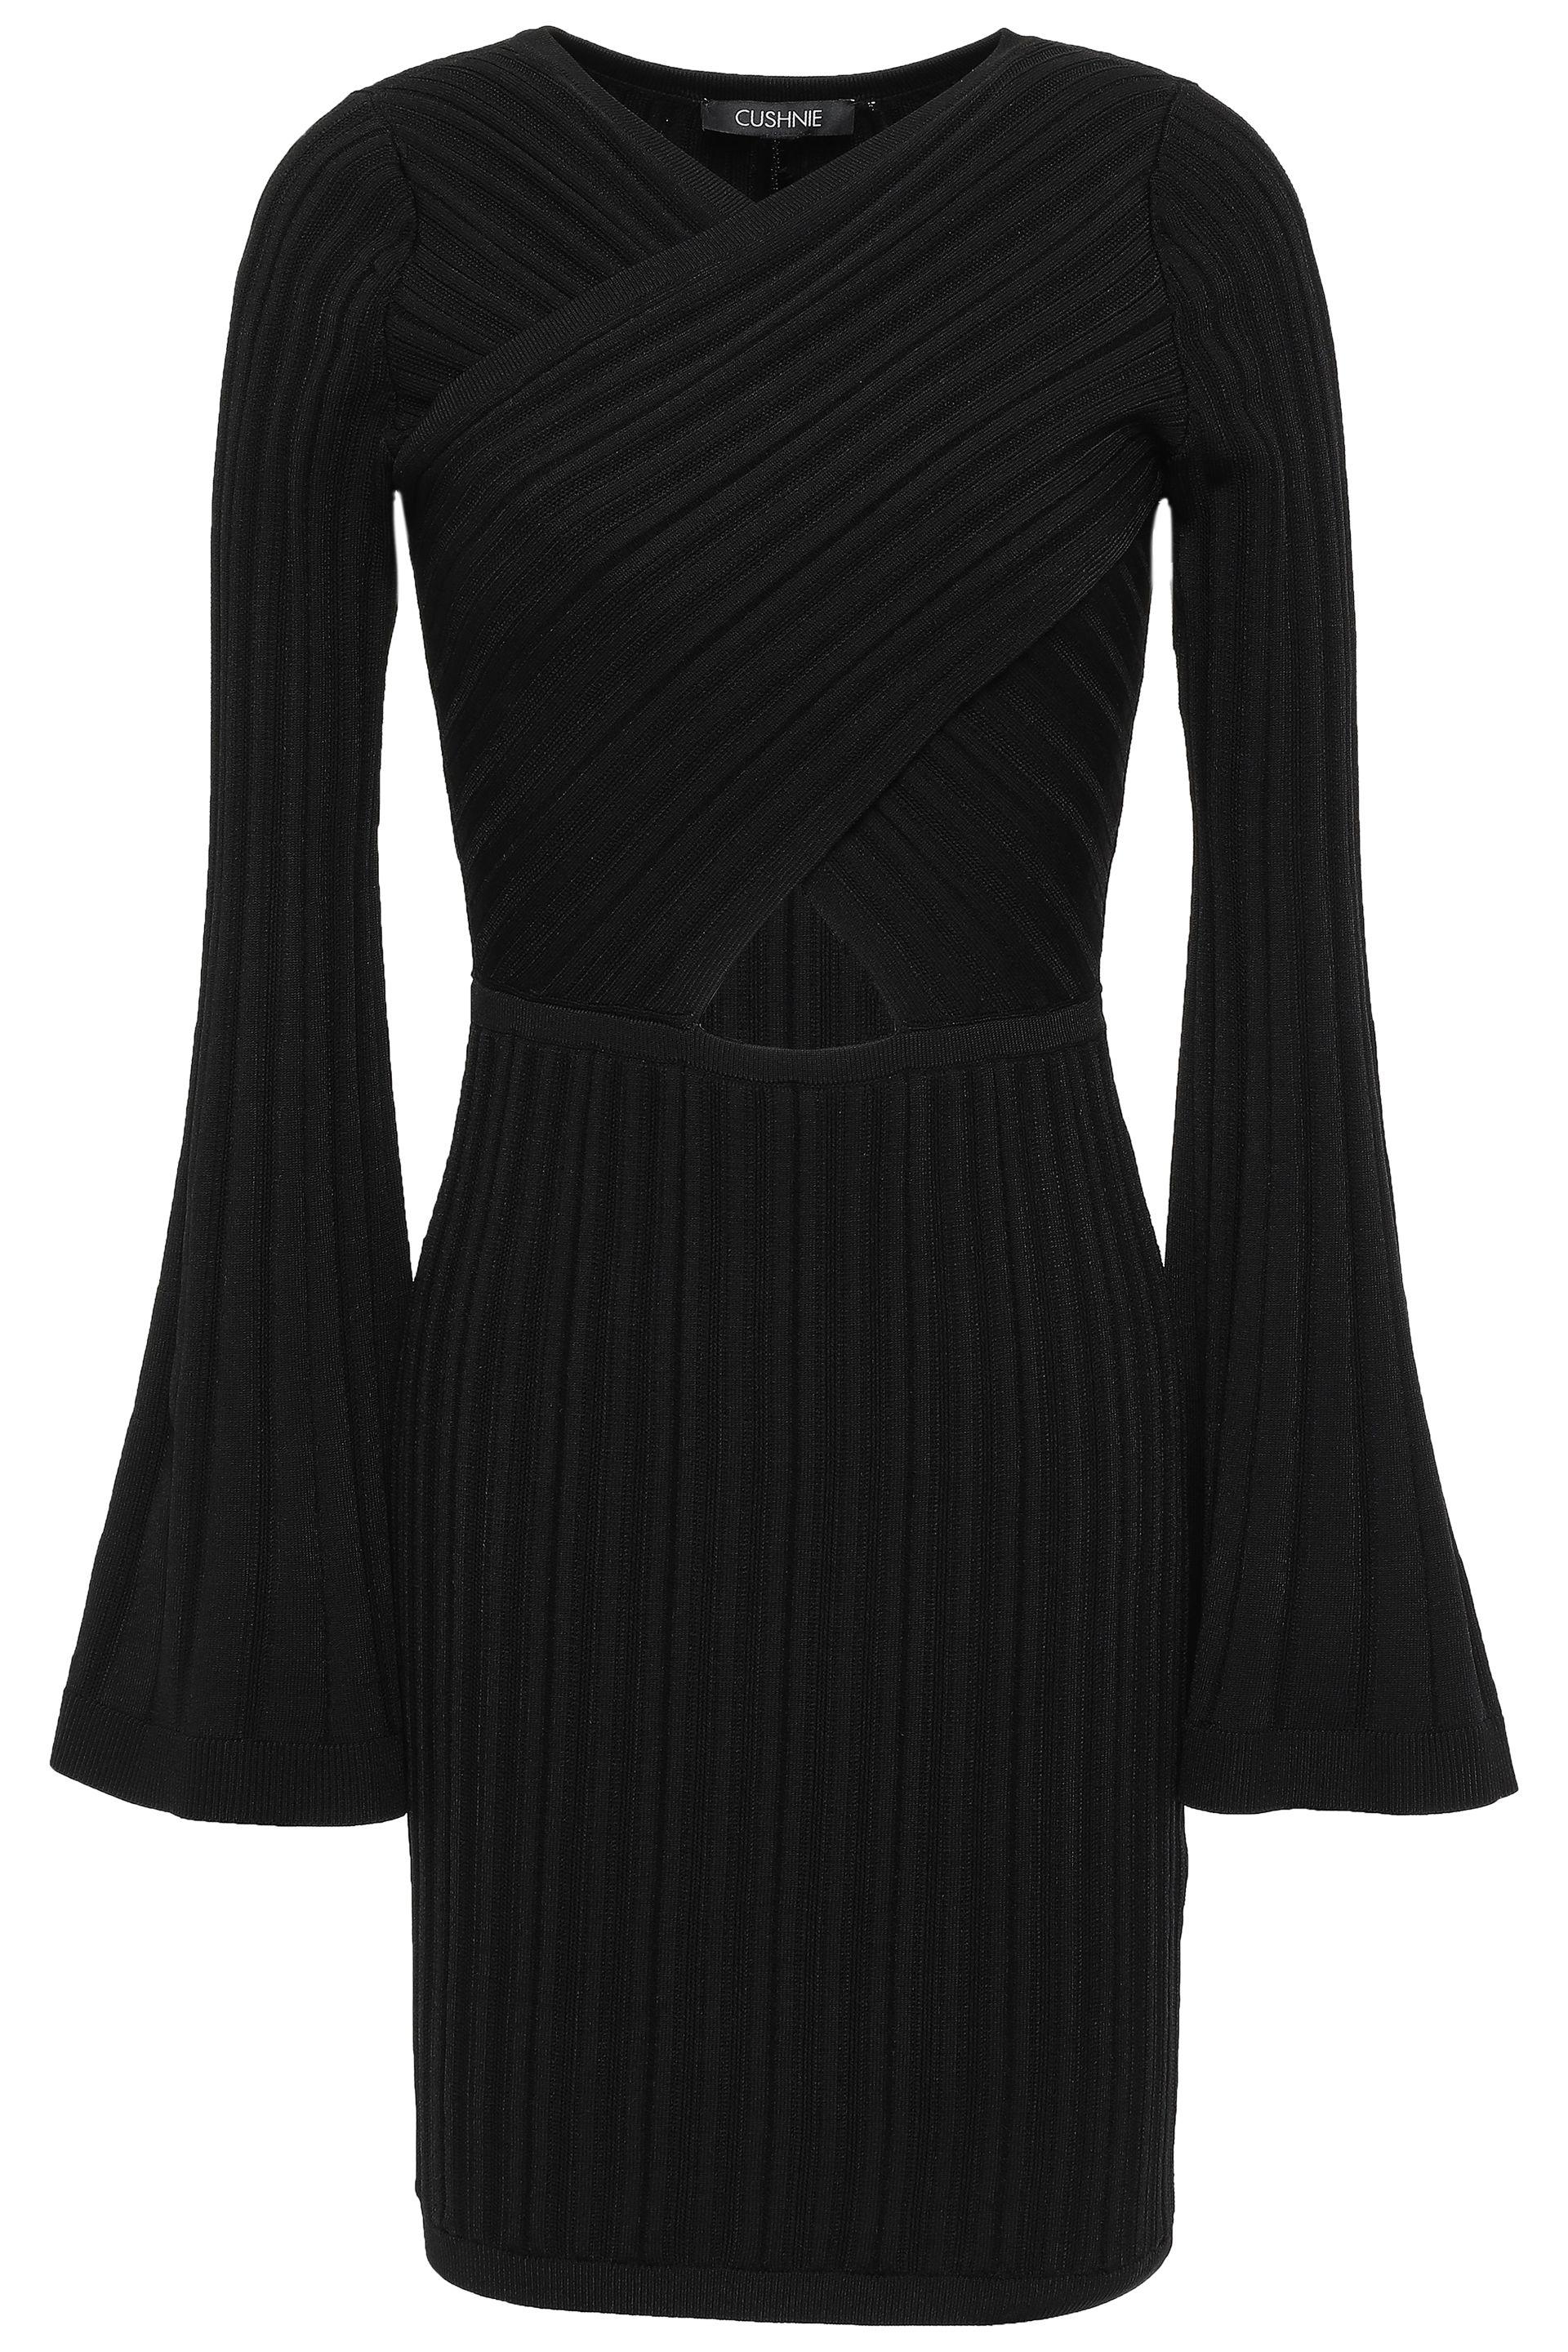 Cushnie Synthetic Cutout Ribbed-knit Mini Dress Black - Lyst